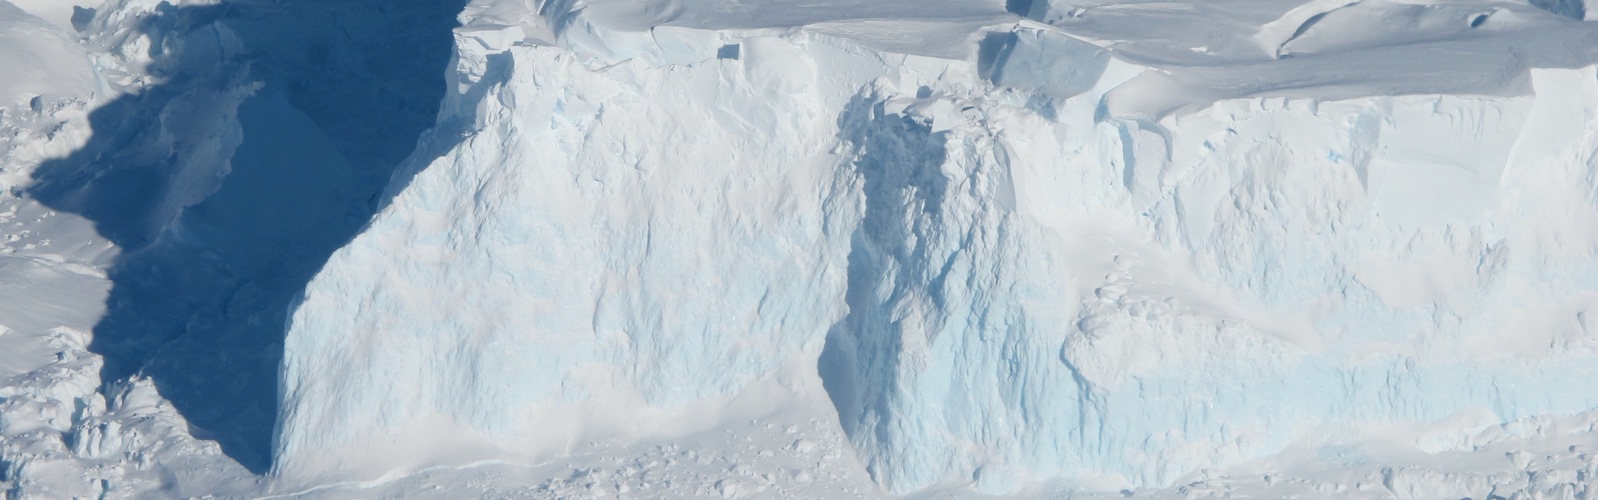 slide 5 - Photo of Thwaites Glacier in Antarctica.